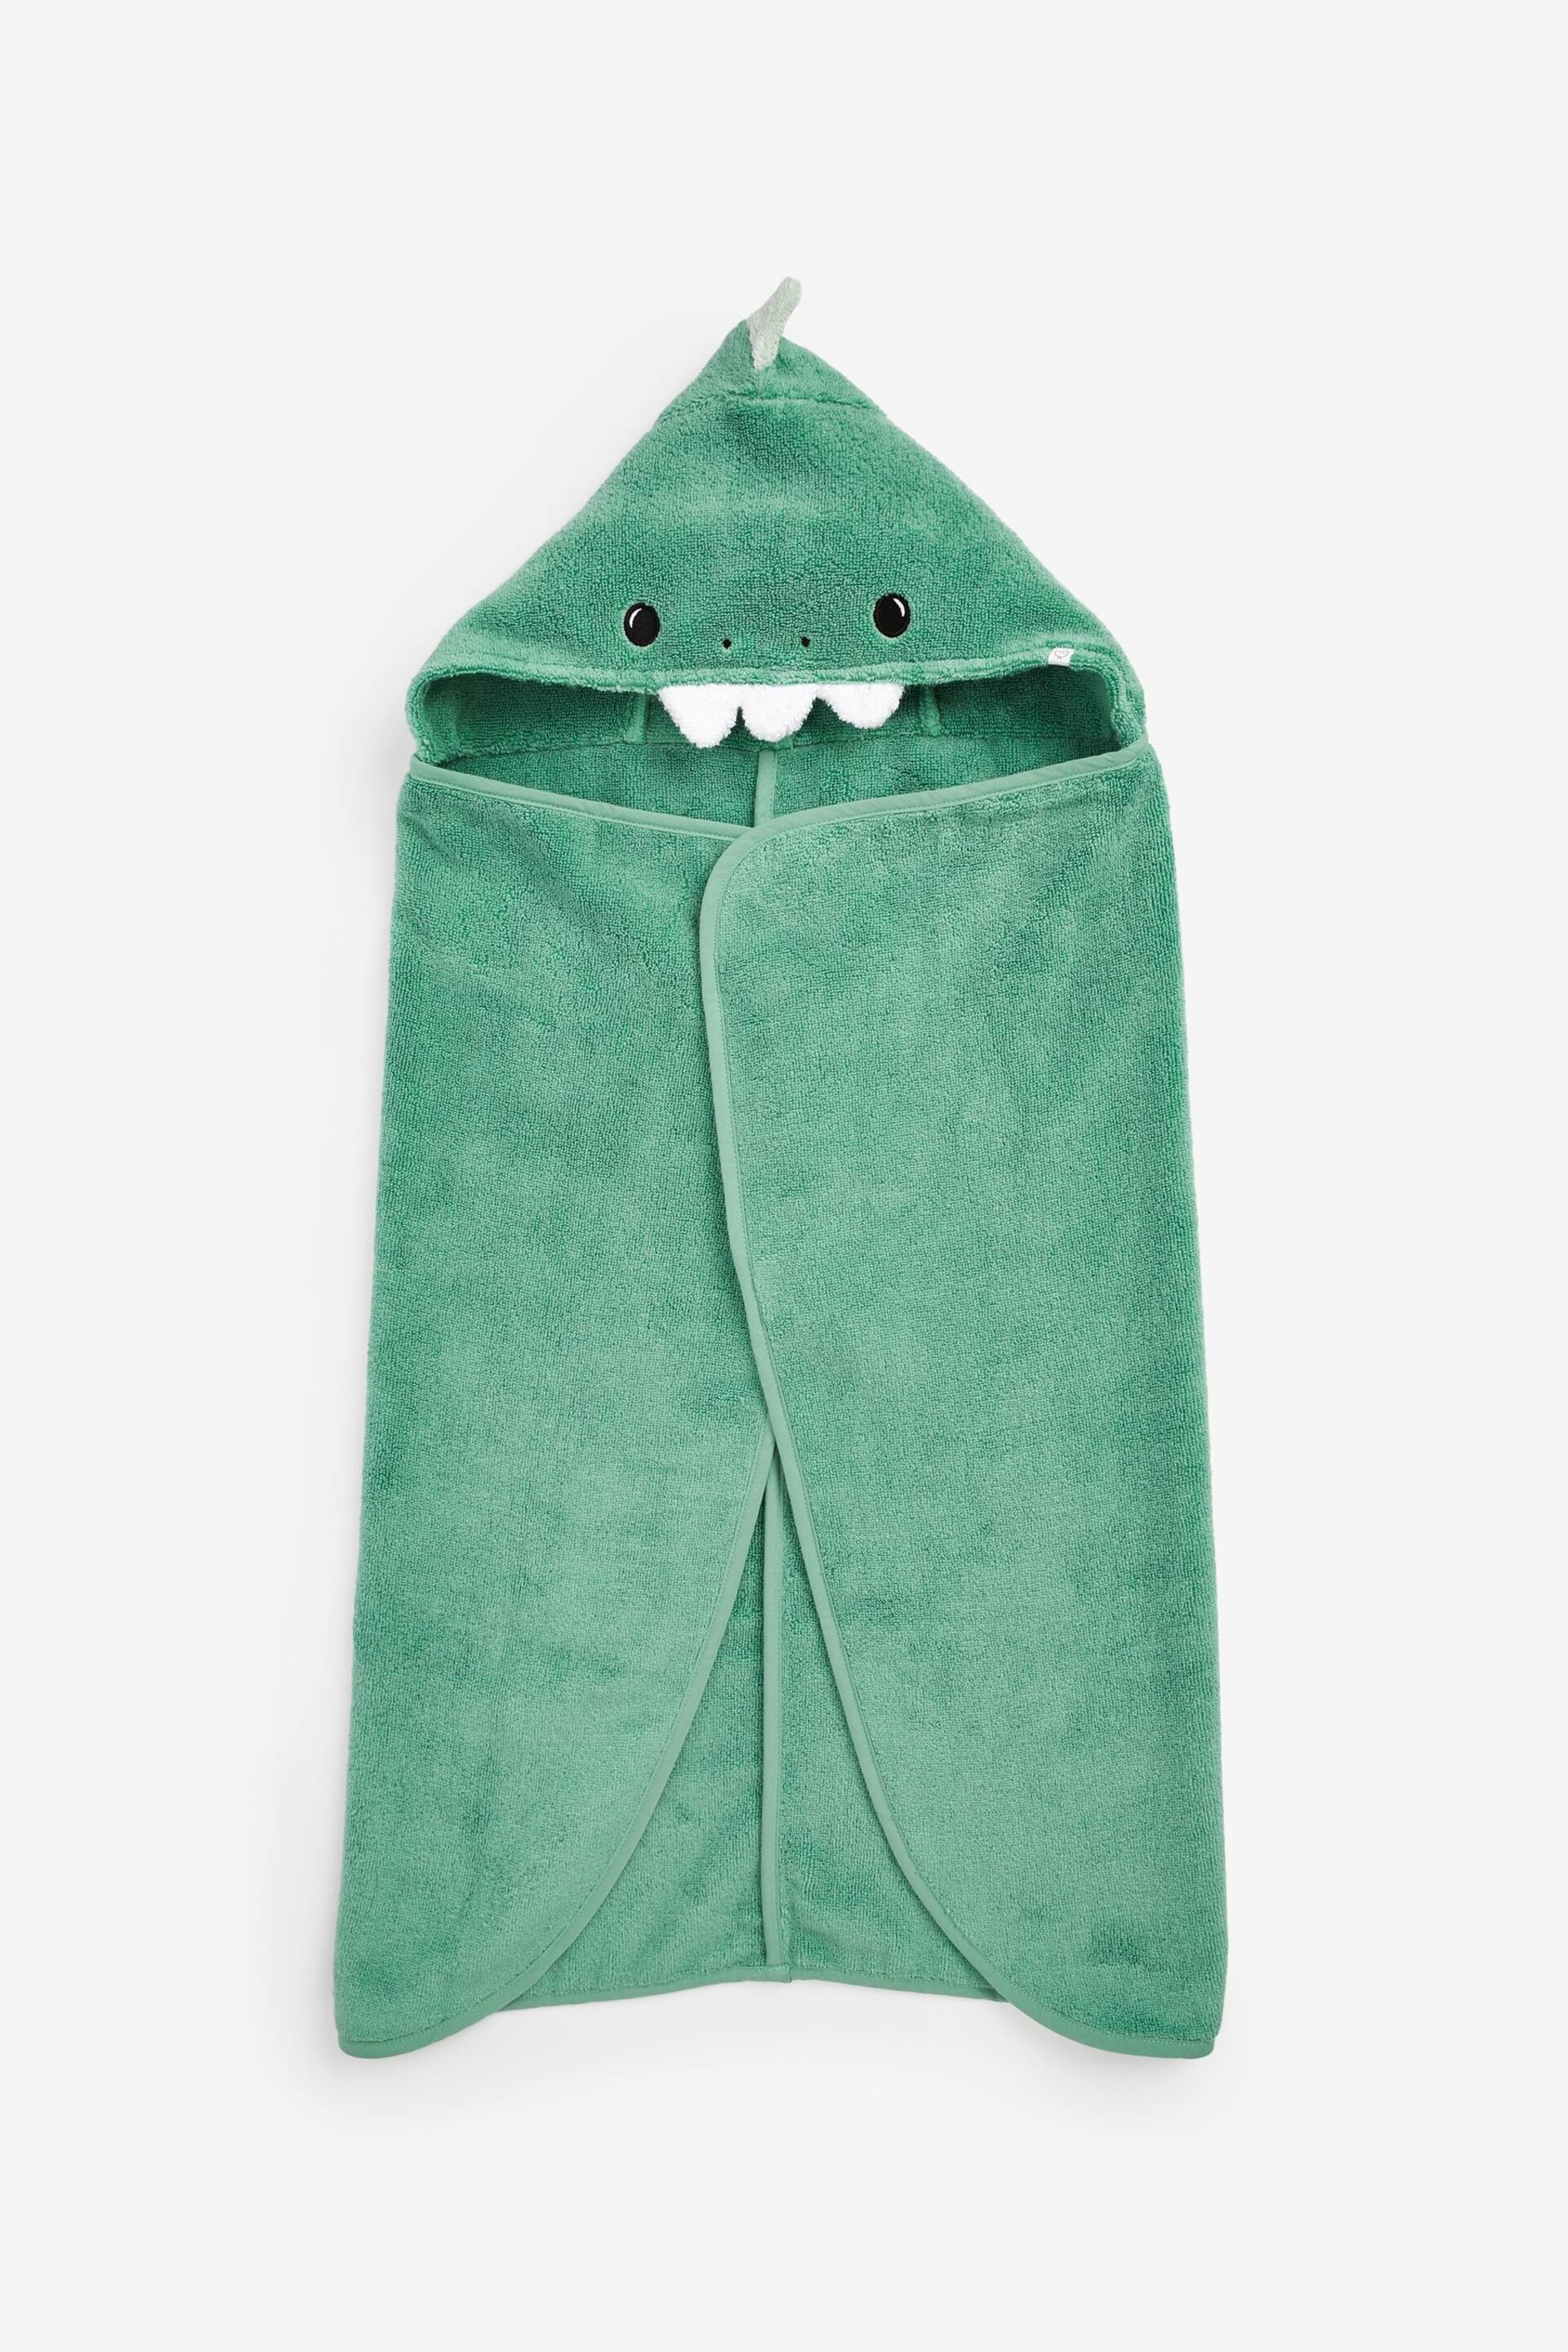 MORI Kids Organic Cotton Dino Hooded Towel - Image 4 of 6